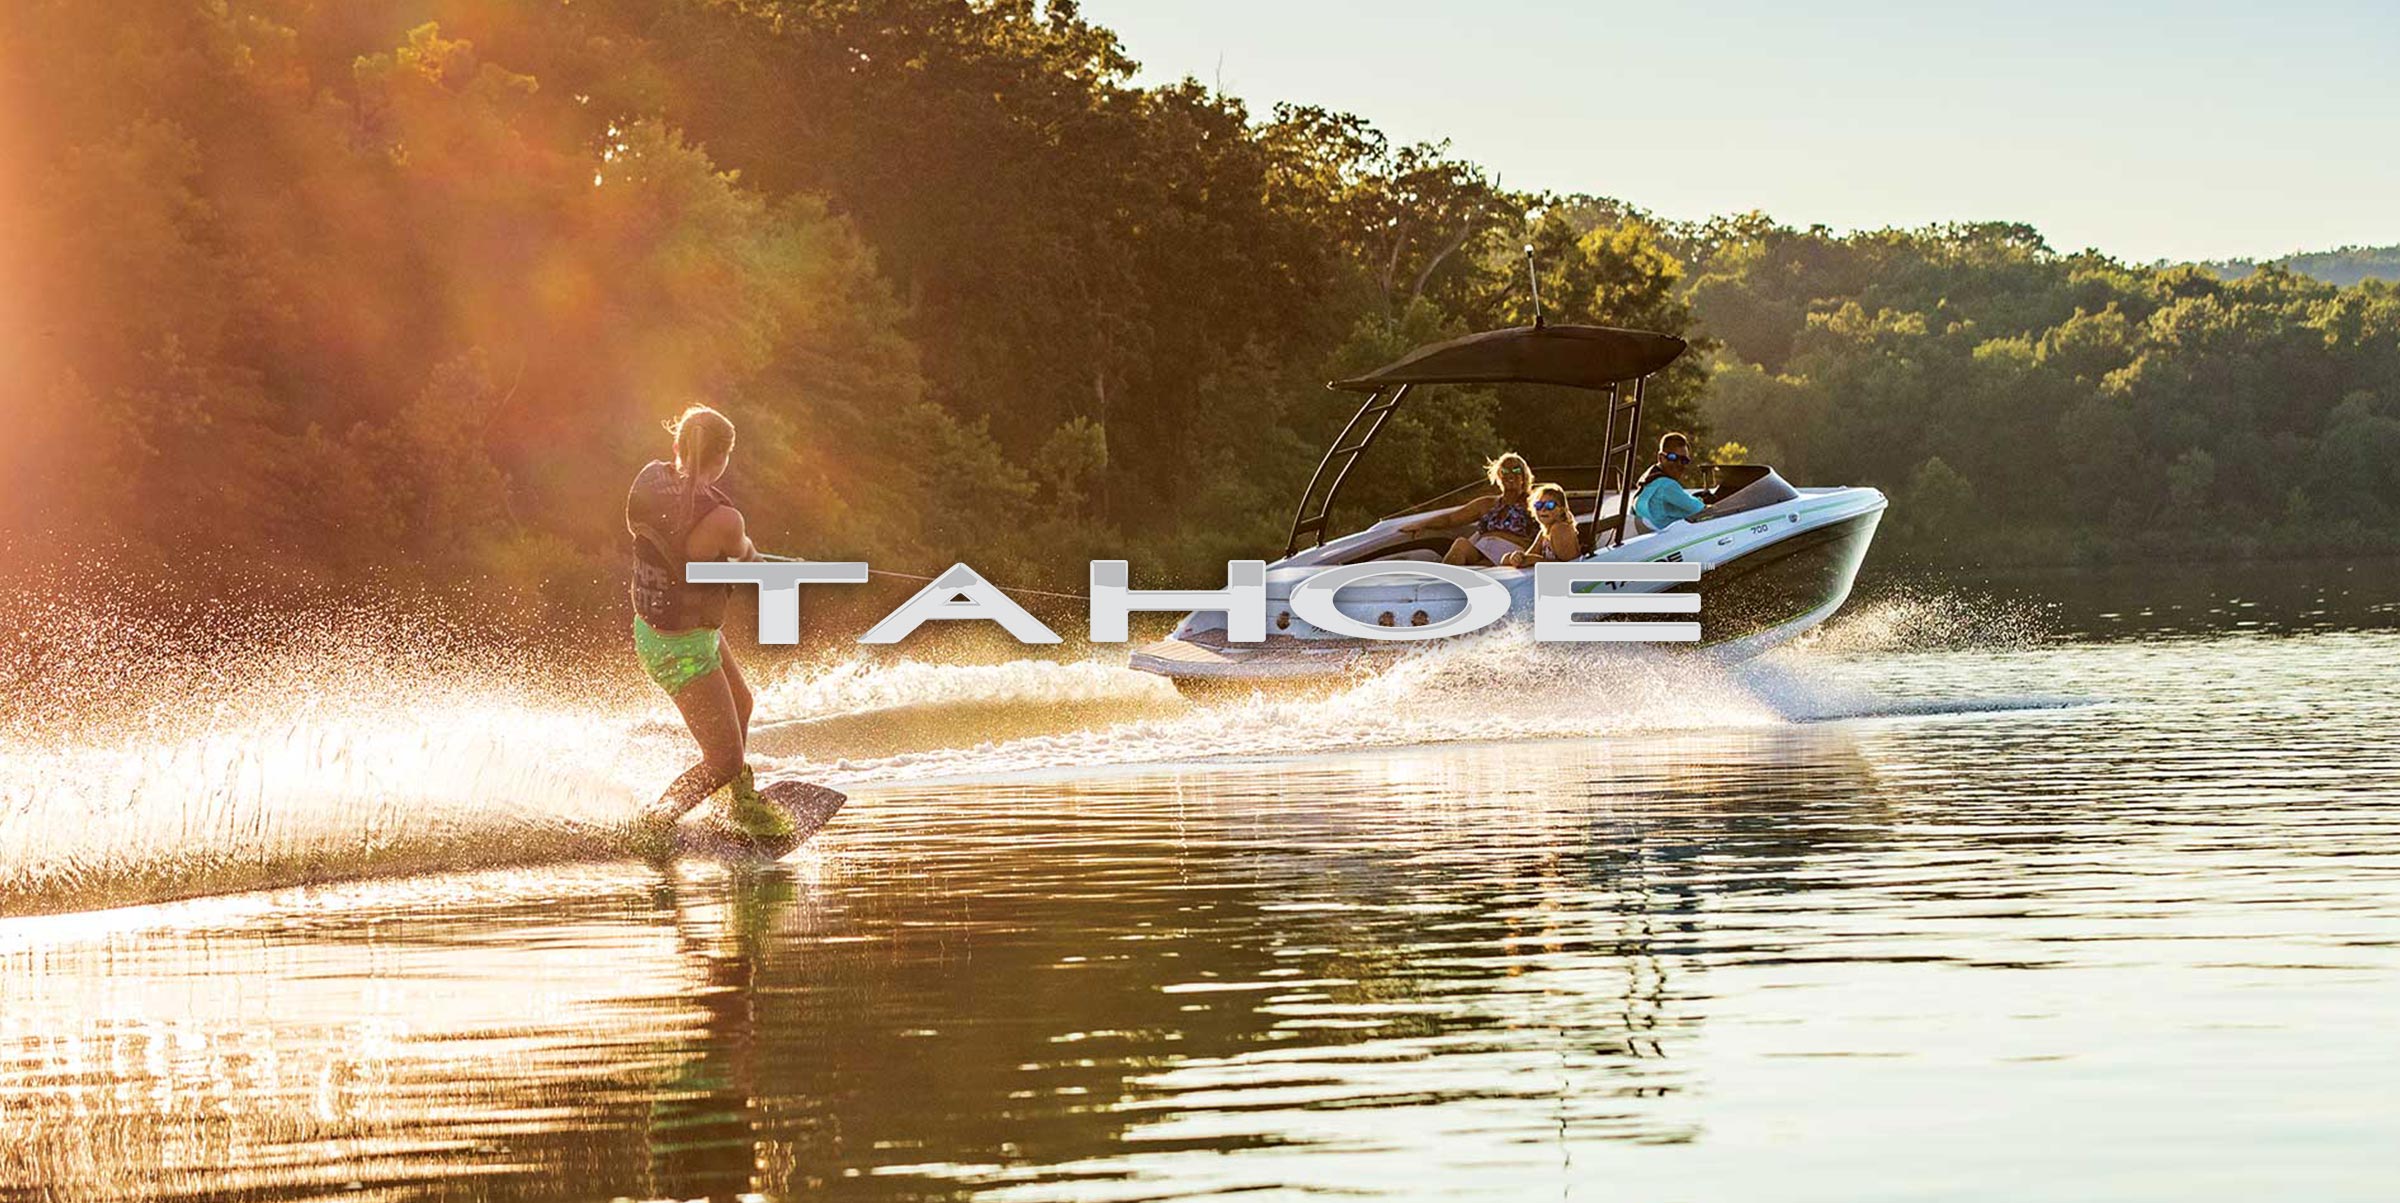 Tahoe logo on Tahoe Boat pulling wakeboarder